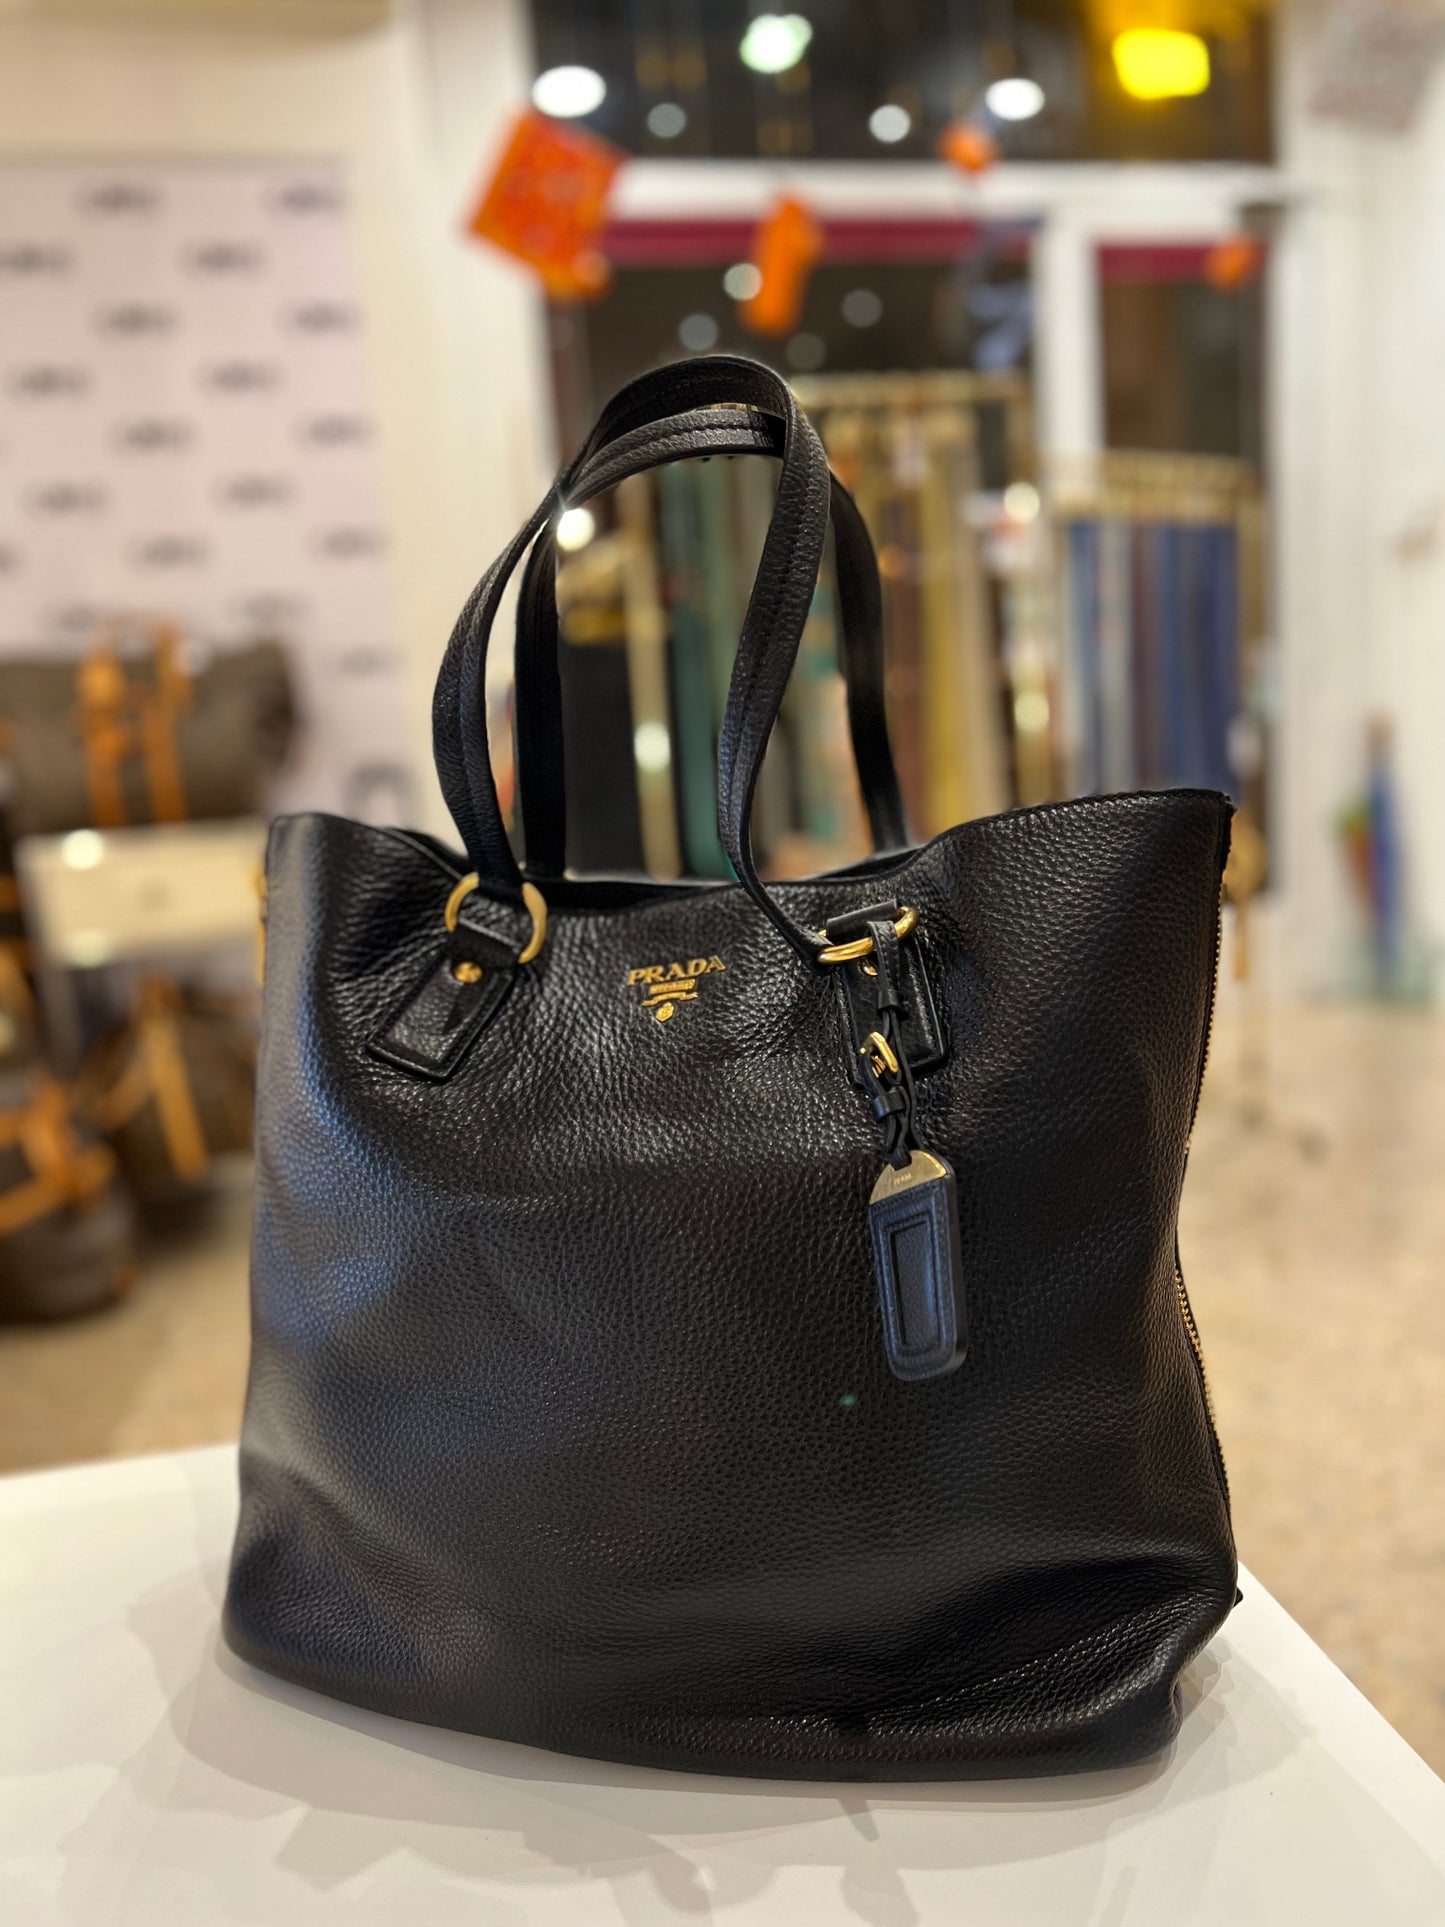 Prada Shopping leather bag